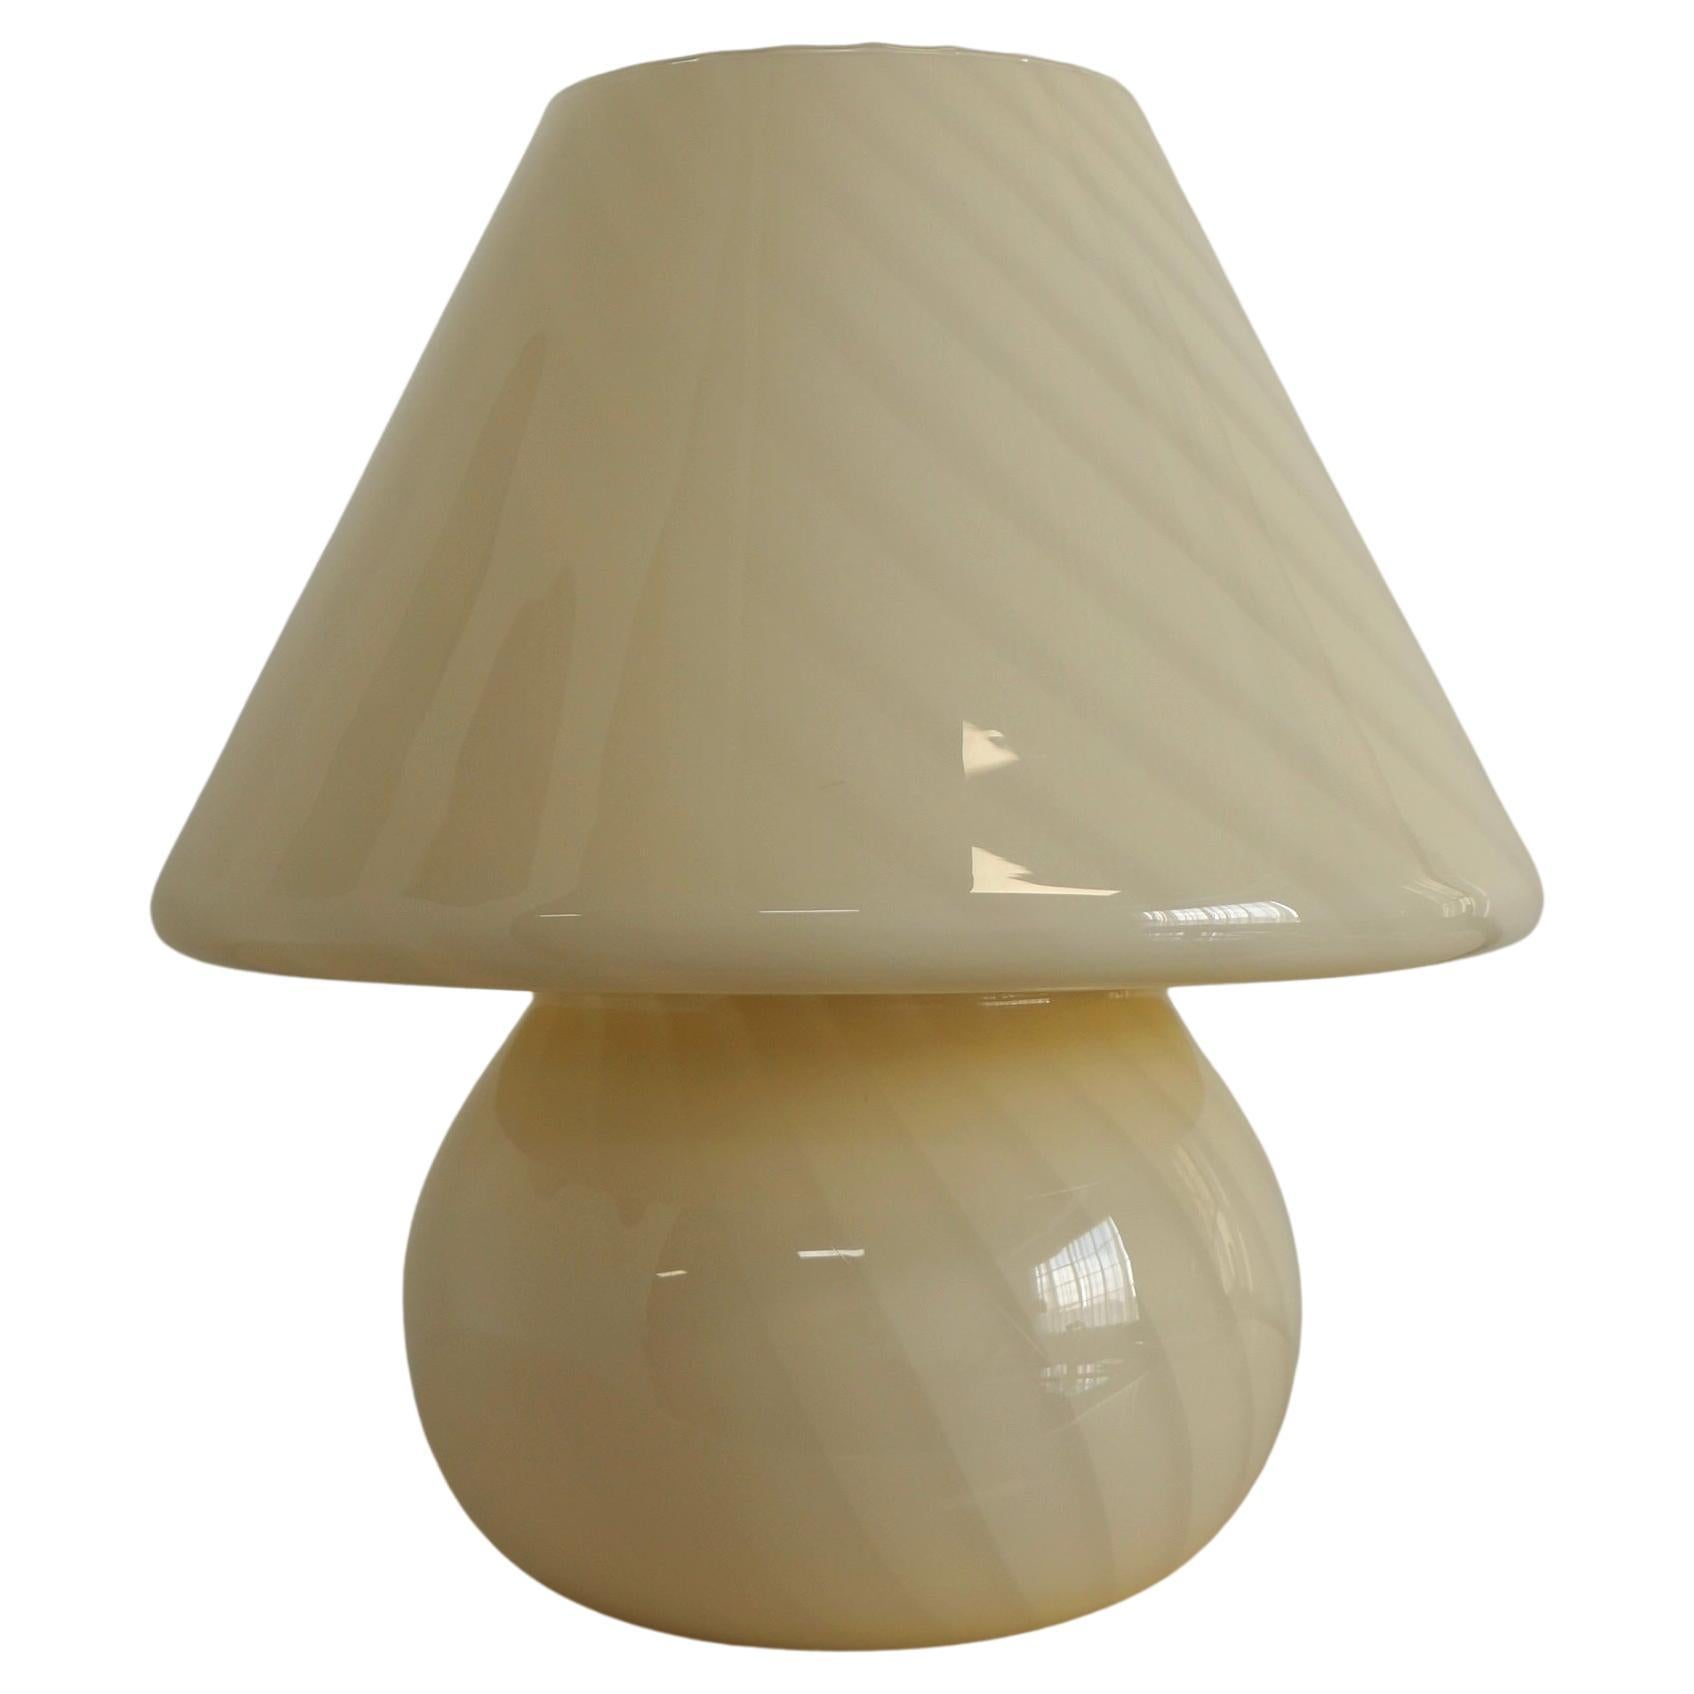 What is a Murano mushroom lamp?